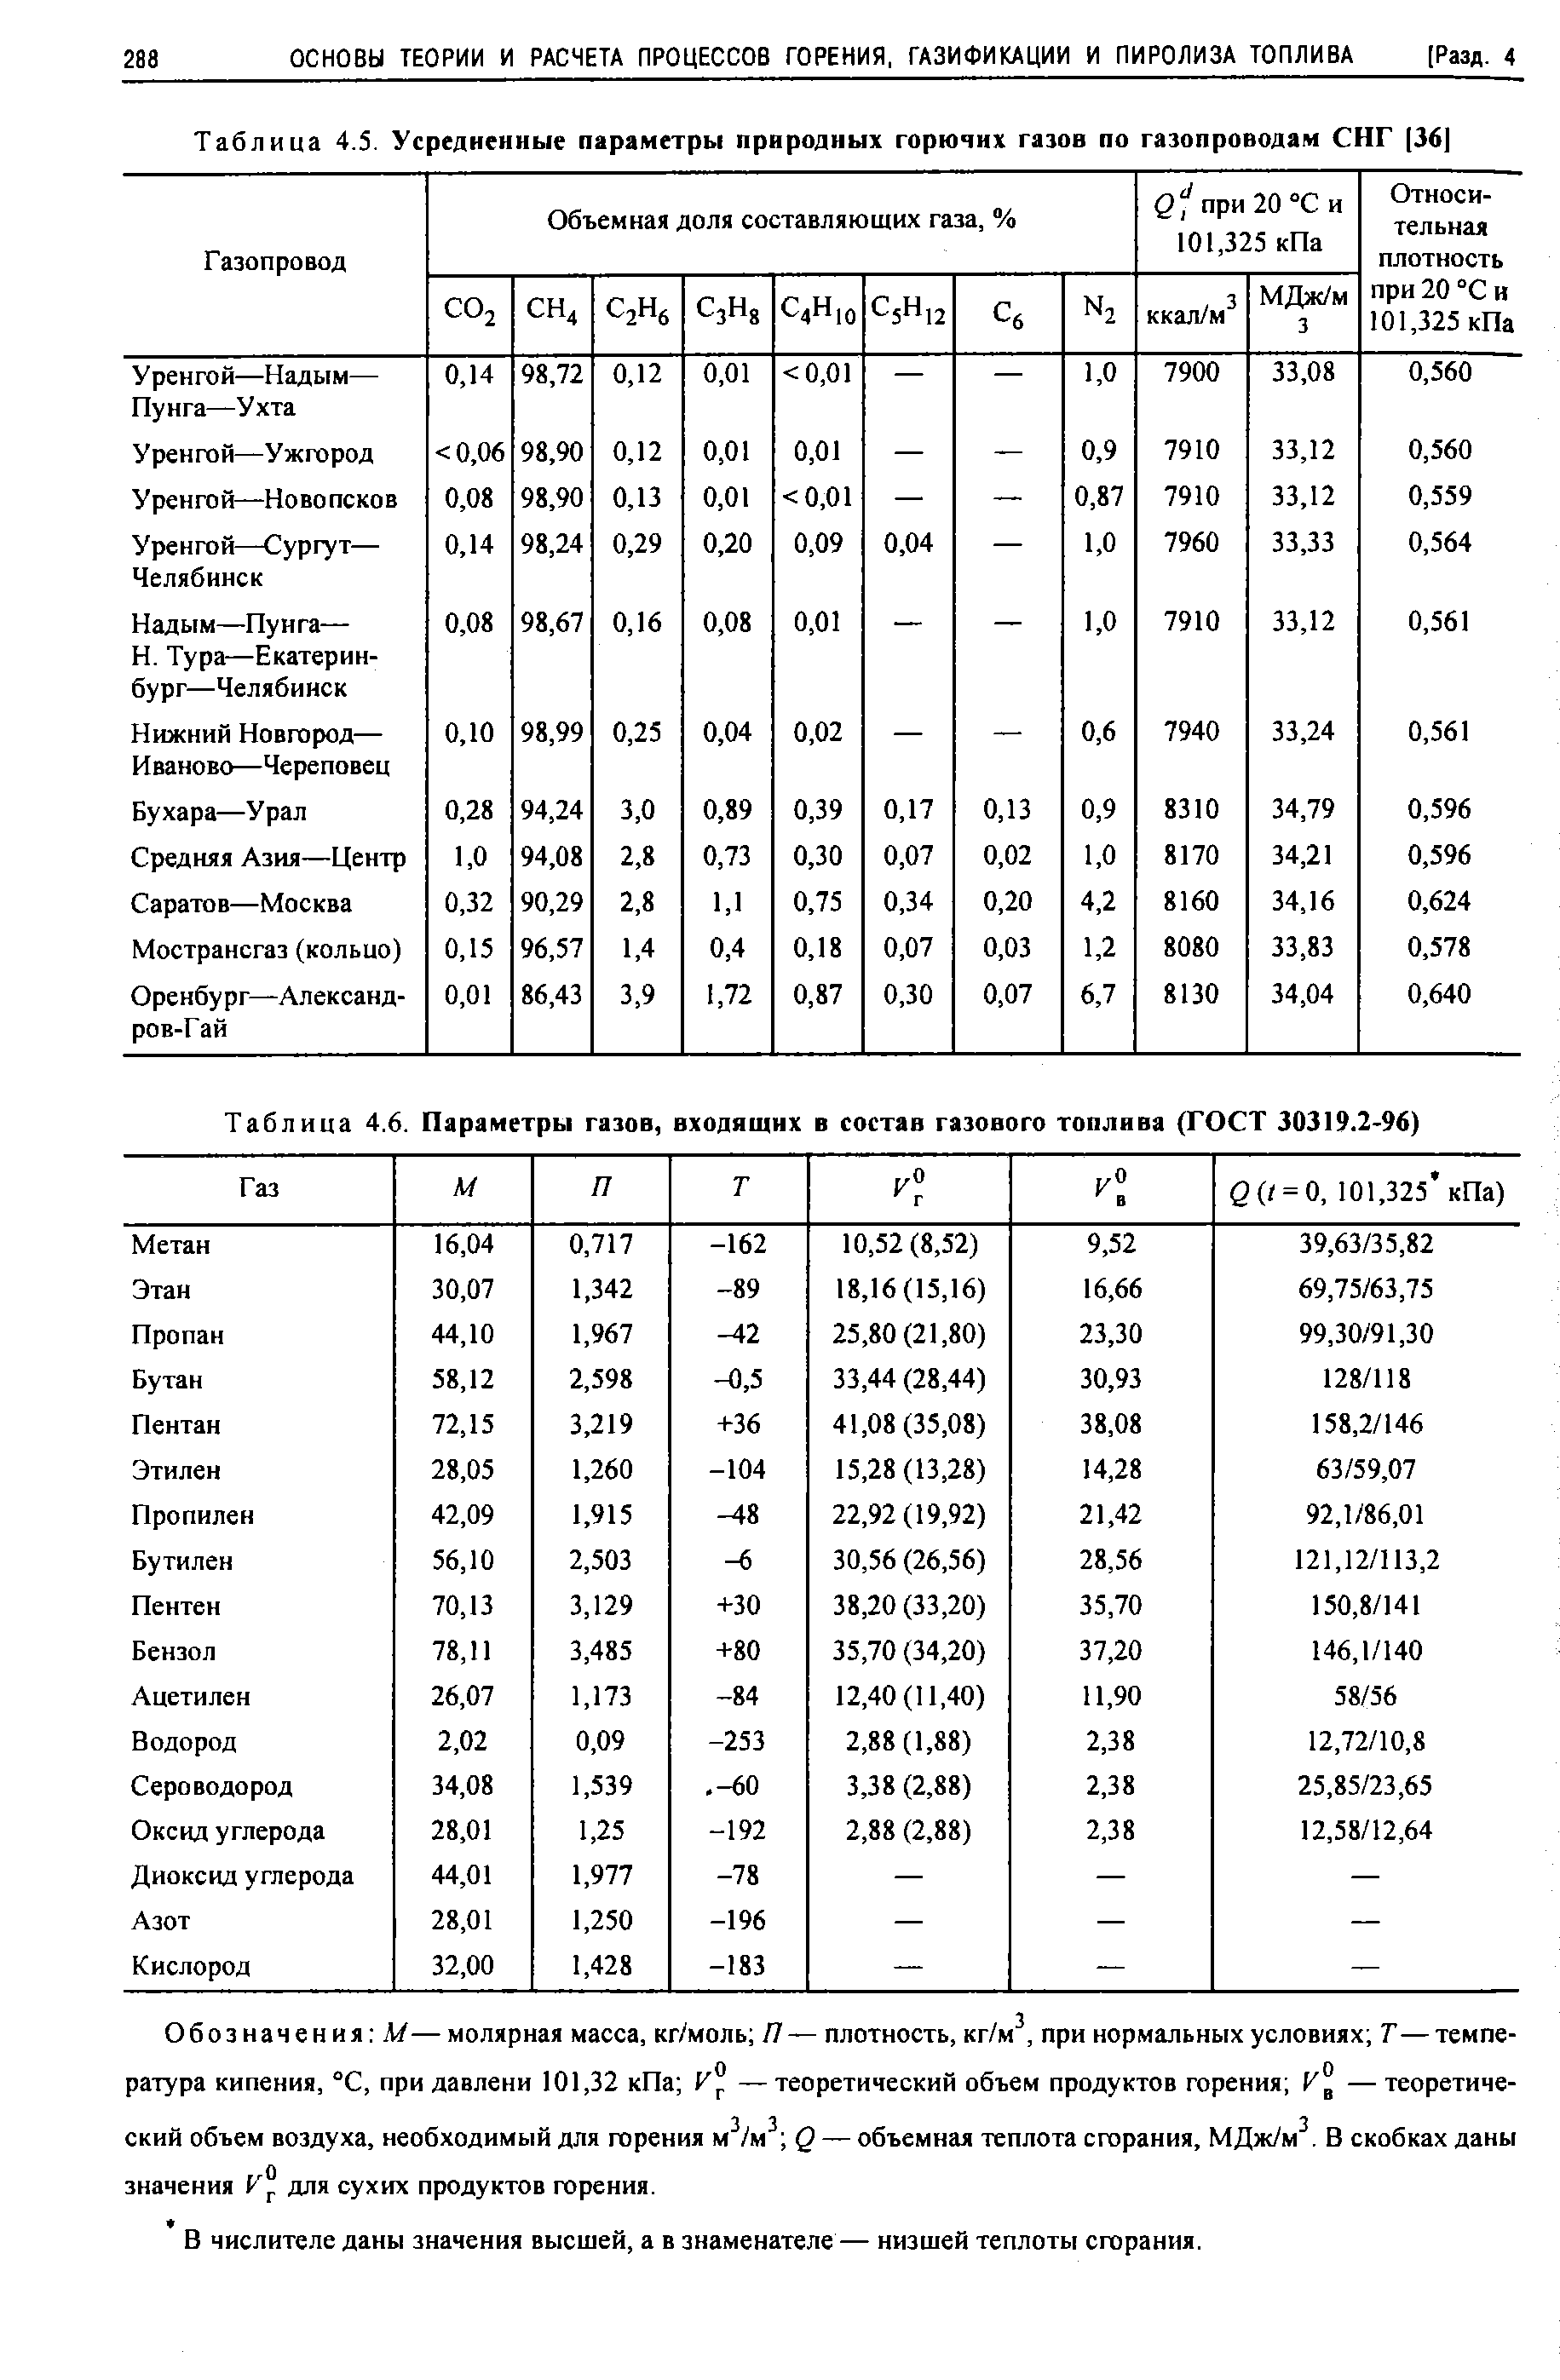 Таблица газов